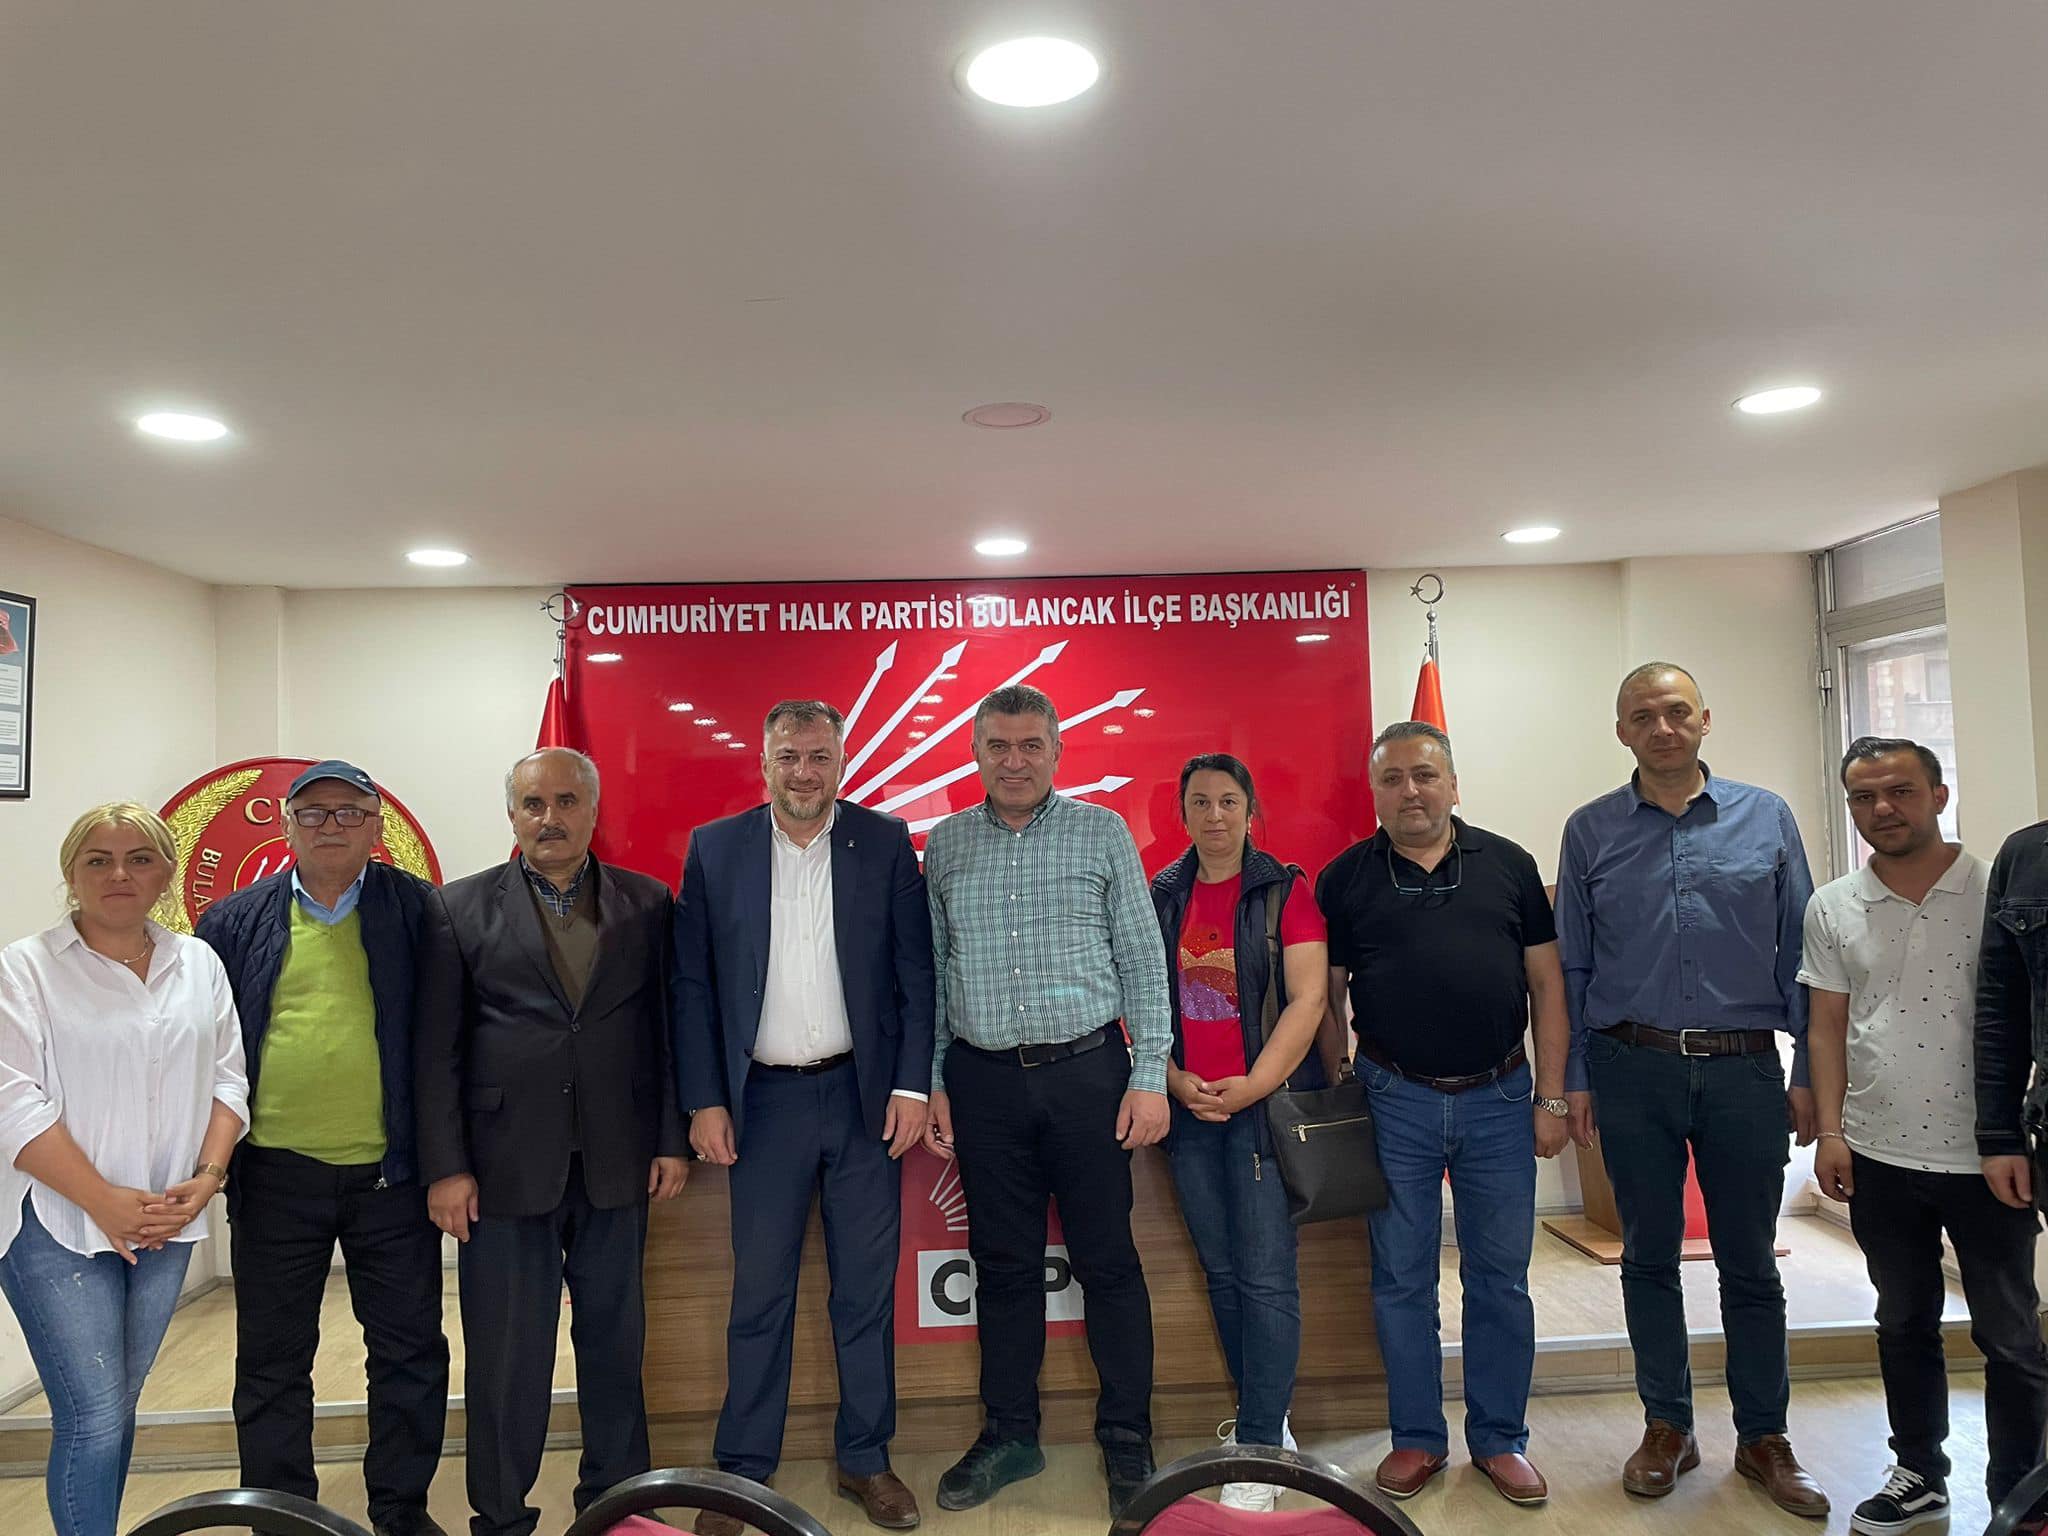 AK Parti’den CHP Bulancak’a Geçmiş Olsun Ziyareti